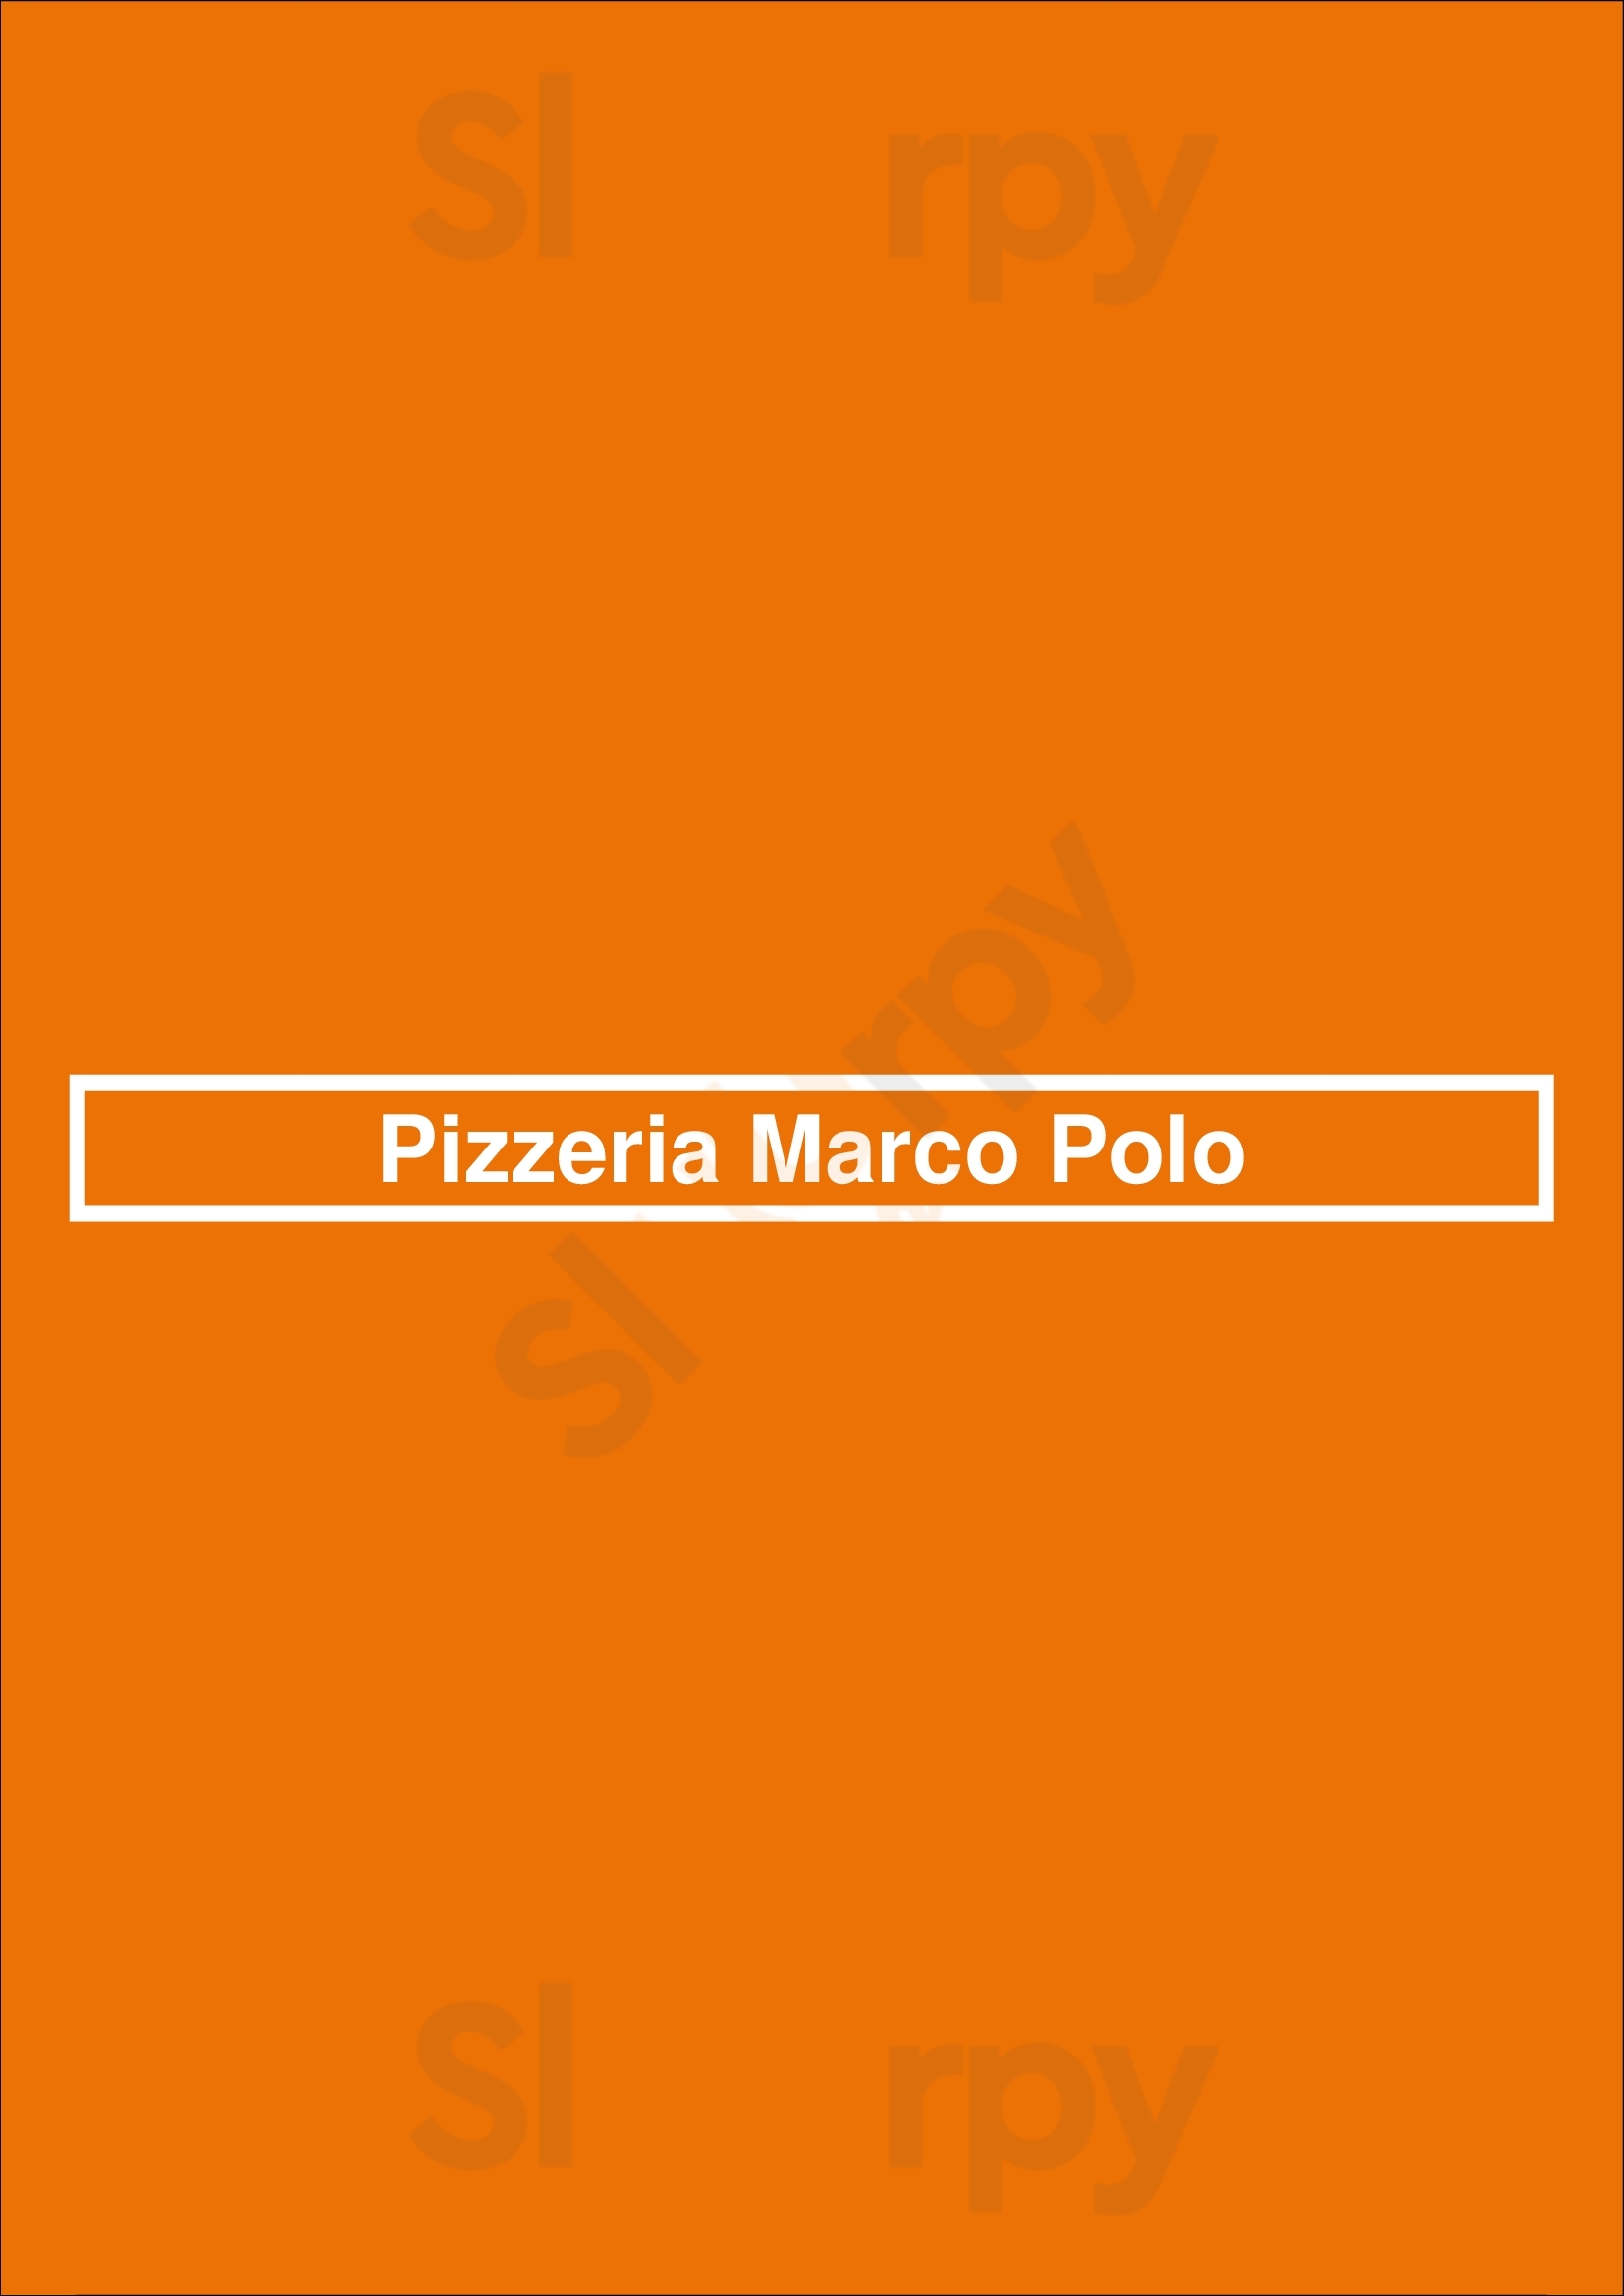 Pizzeria Marco Polo Rotterdam Menu - 1